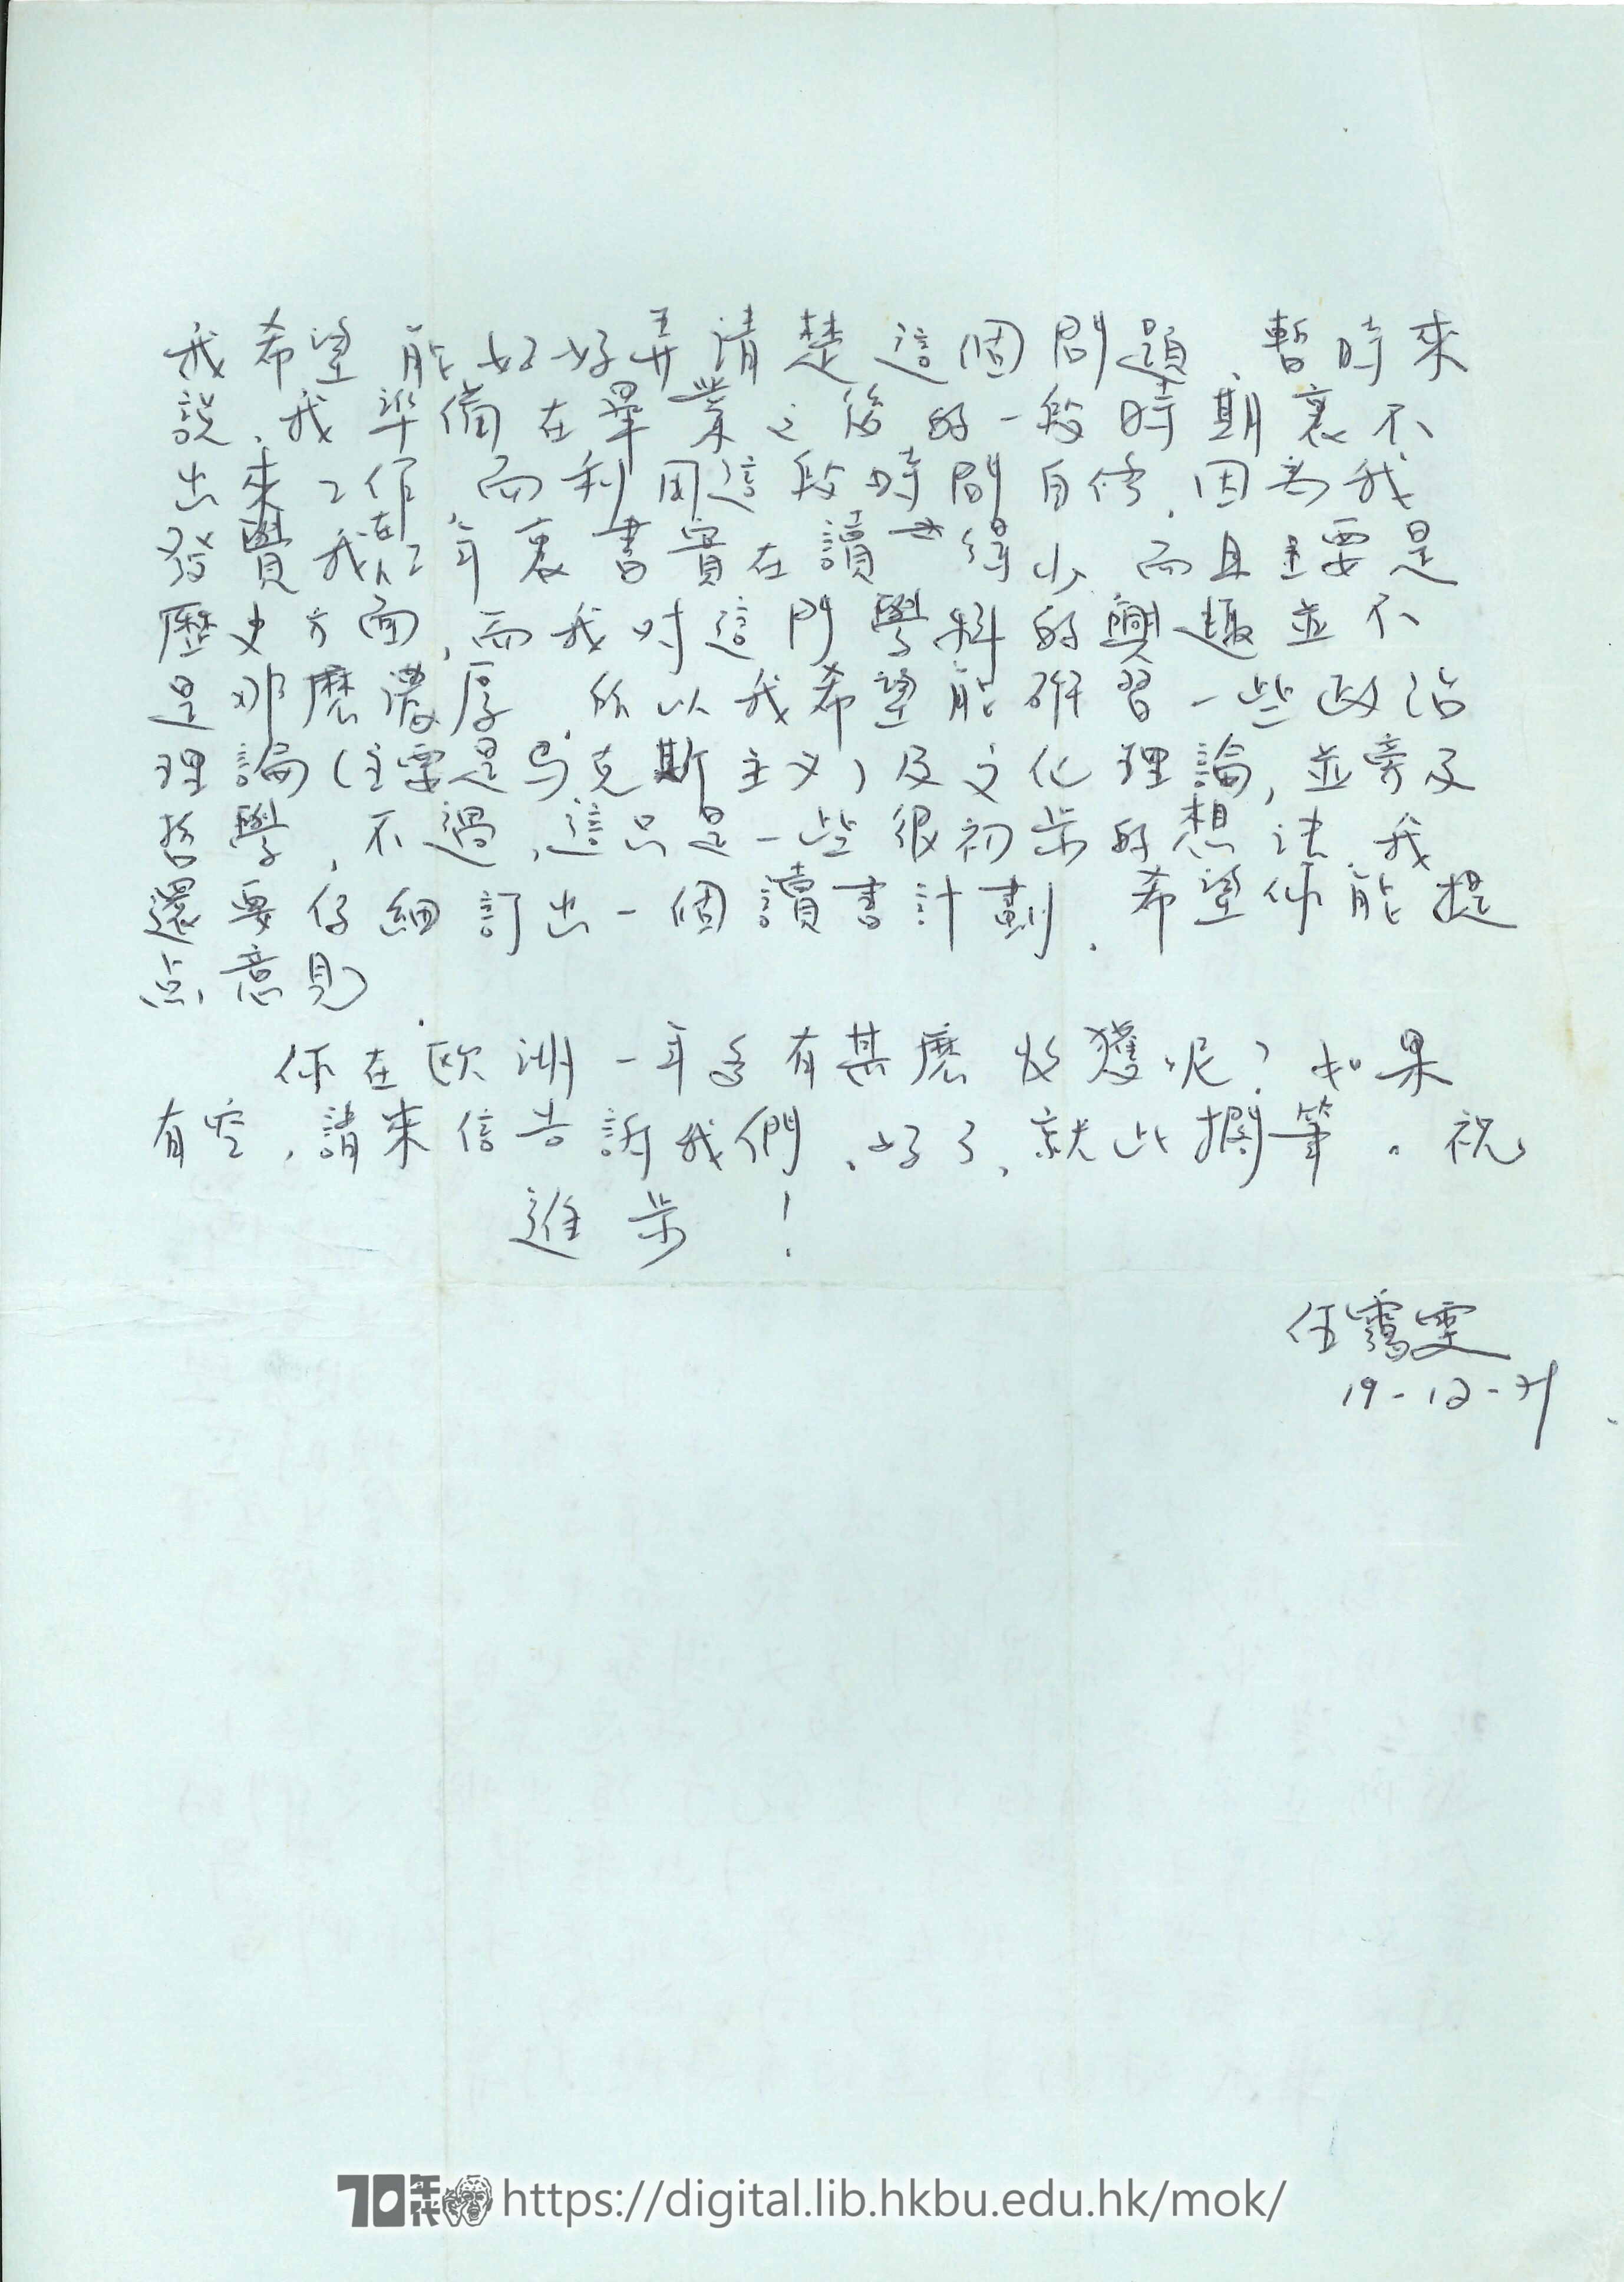   Letter from Yam Oi-man to Mok Chiu Yu 仼靄雯 